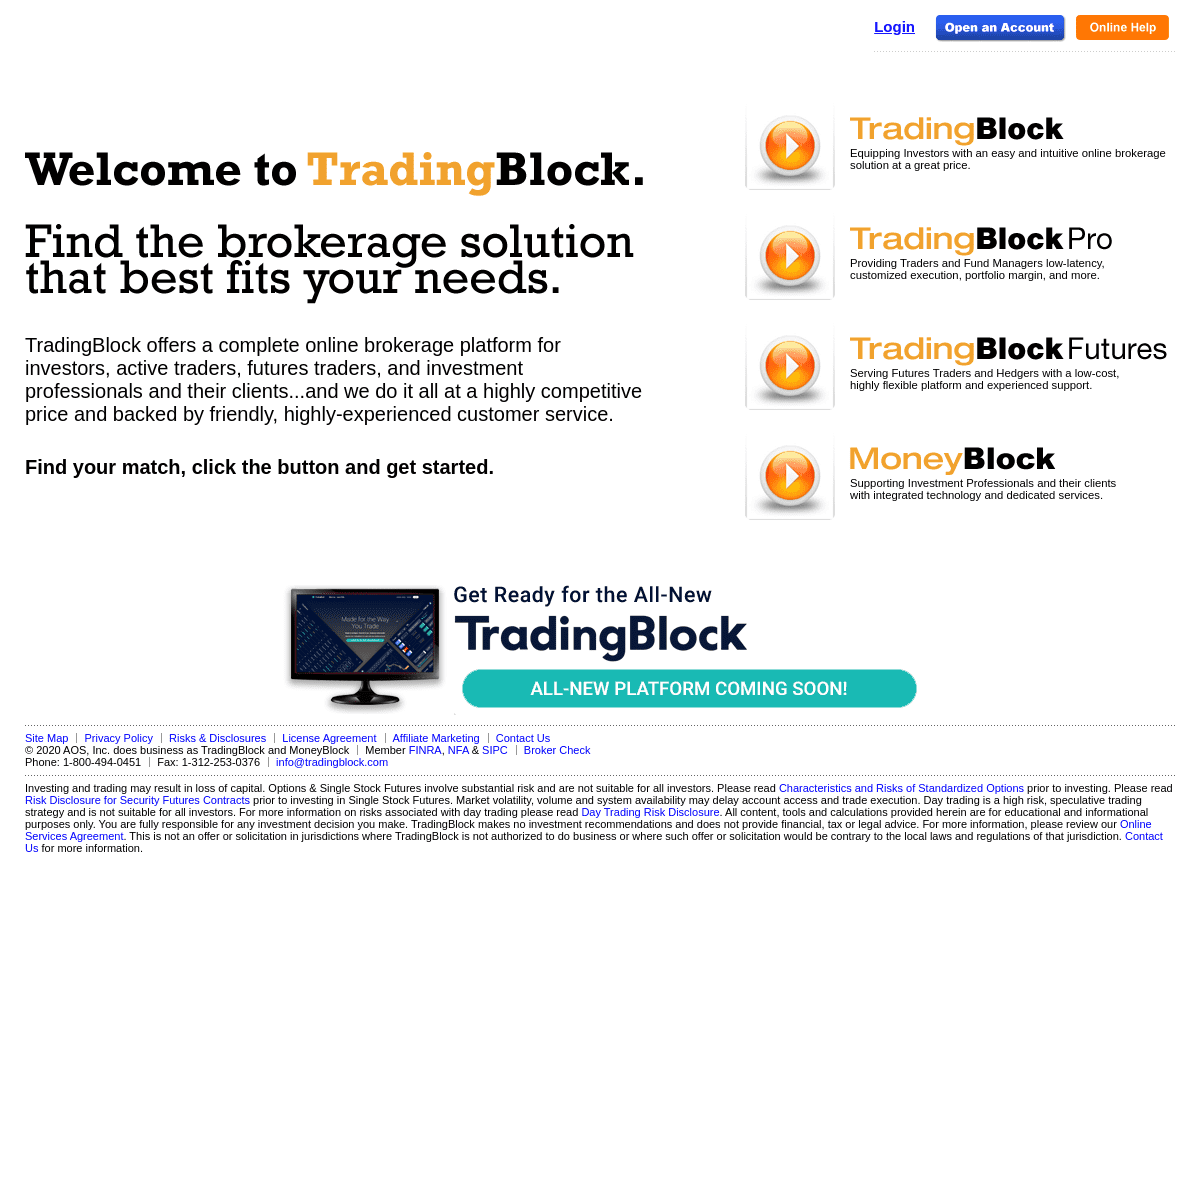 A complete backup of tradingblock.com